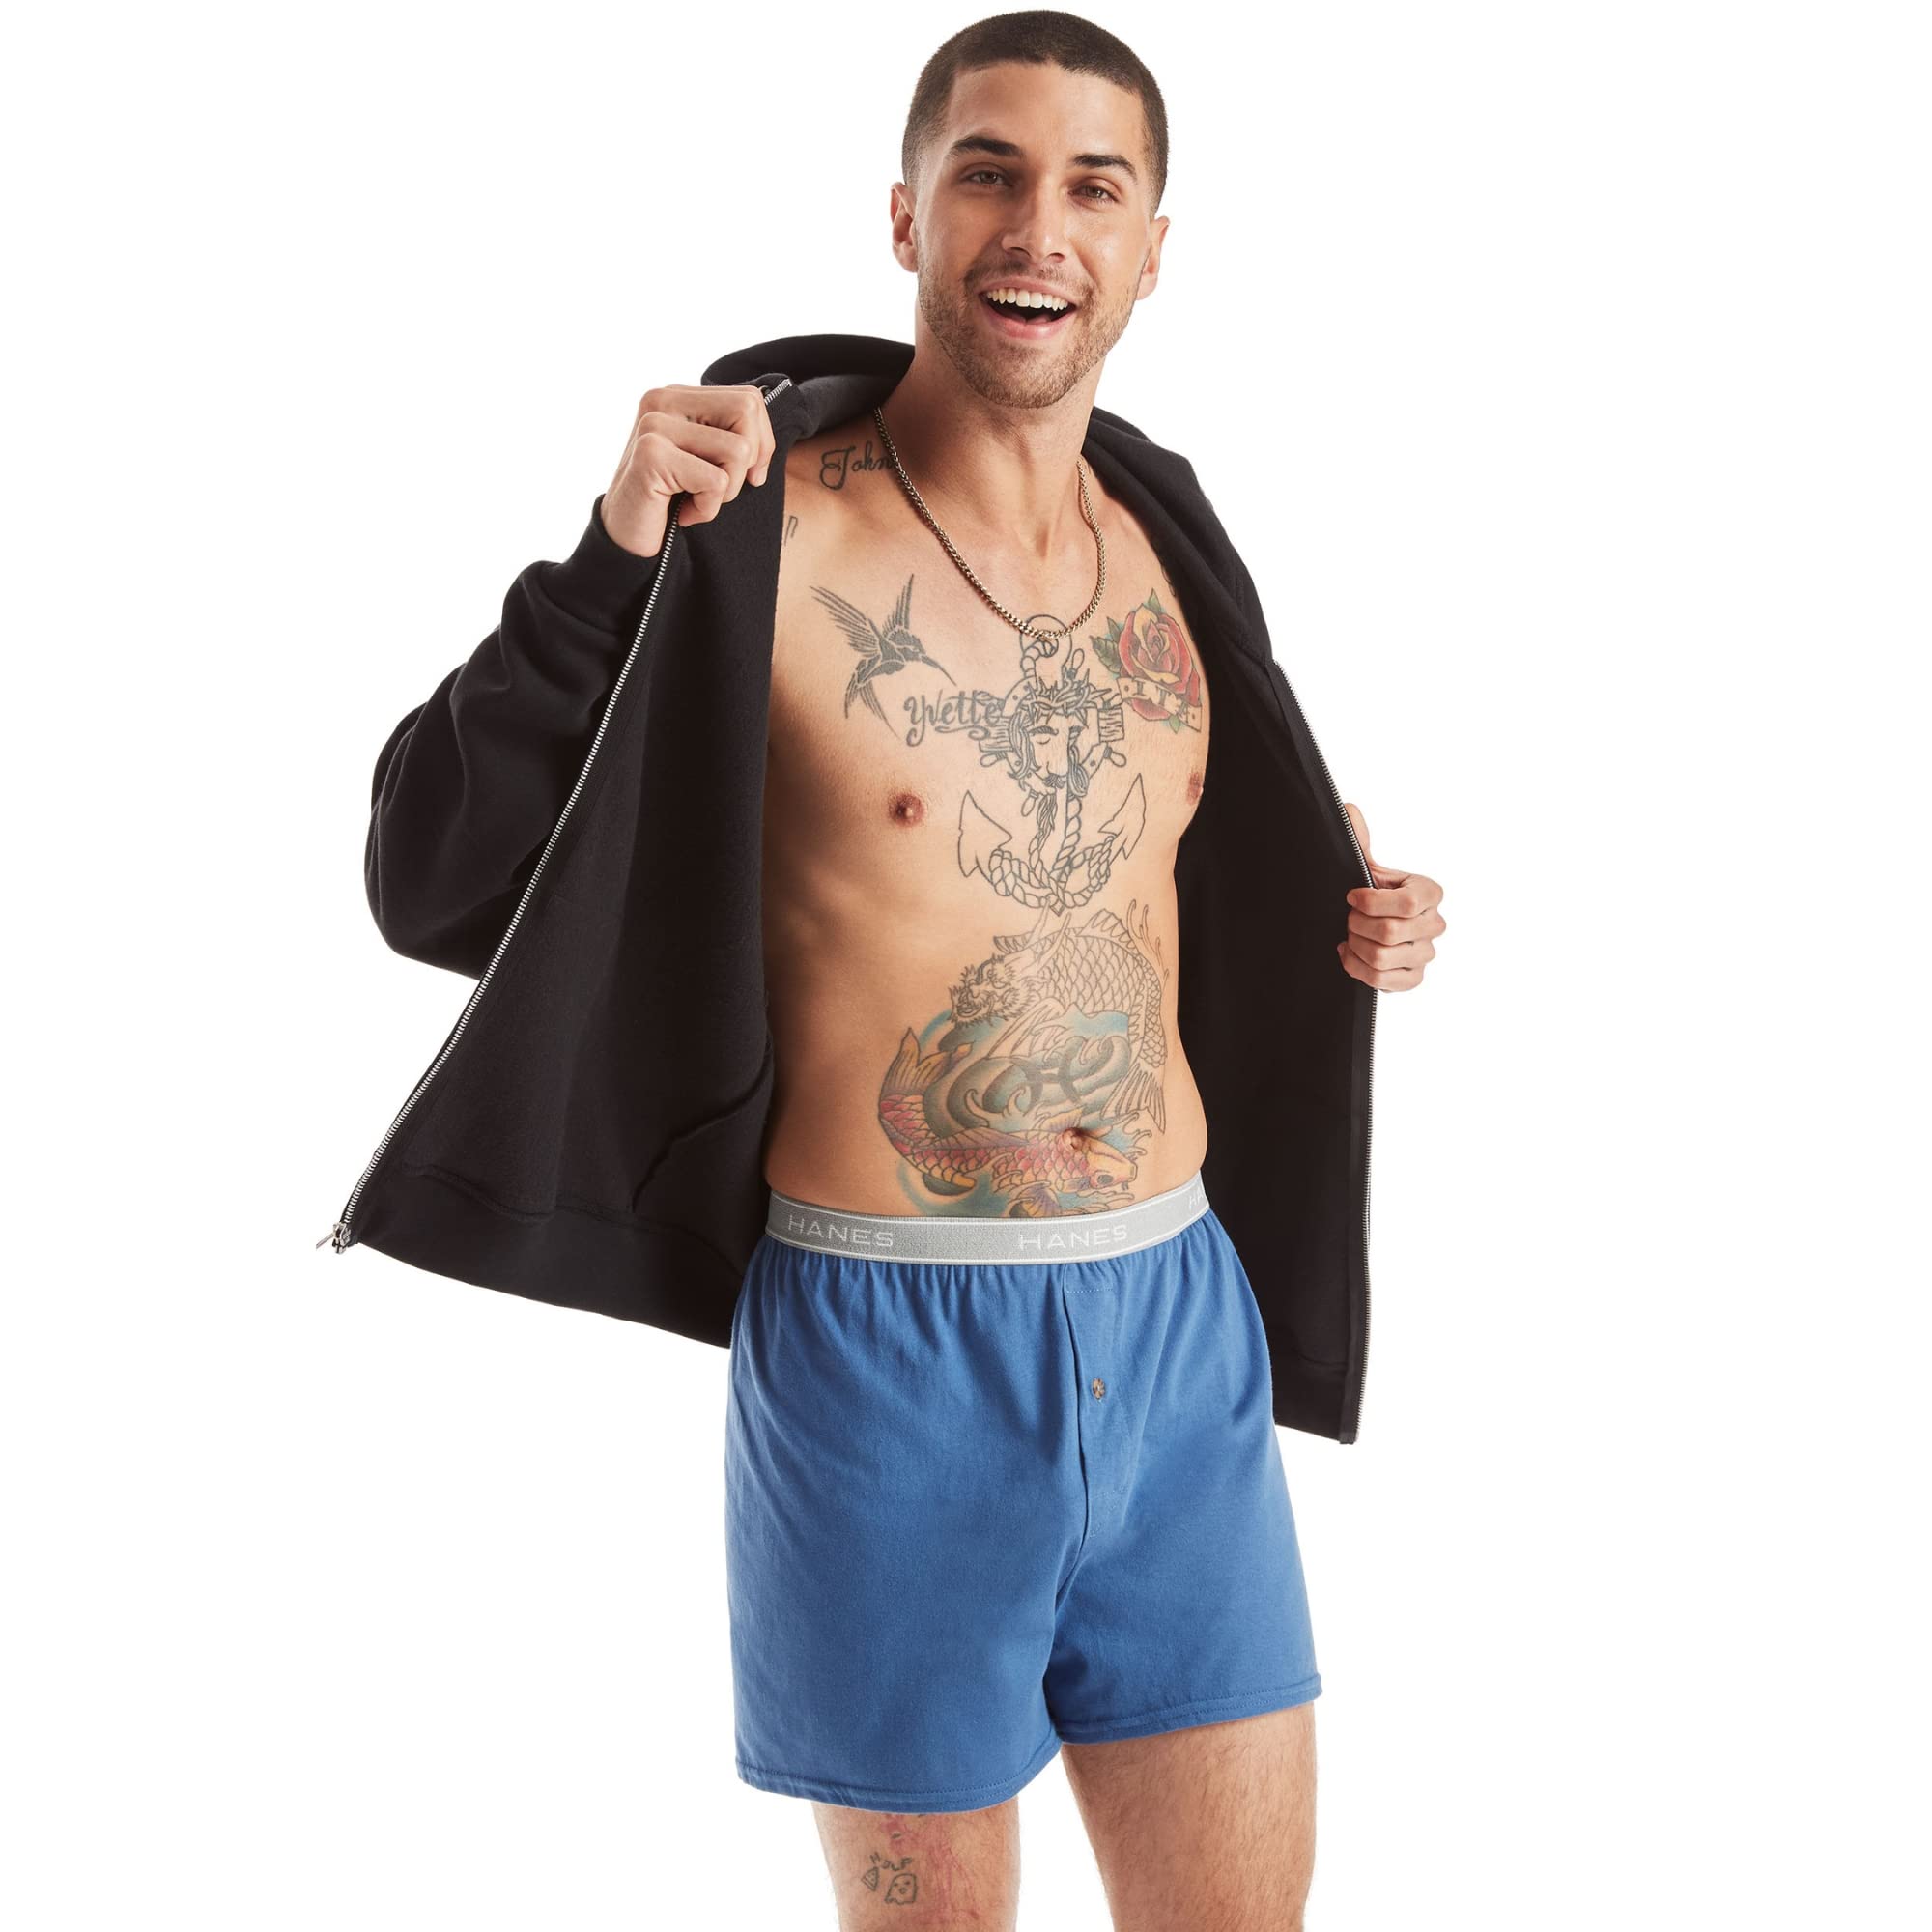 Hanes Men's Boxers 5-Pack, Cotton Knit Comfortable Boxer Underwear, Moisture-Wicking Cotton Boxers Multipack